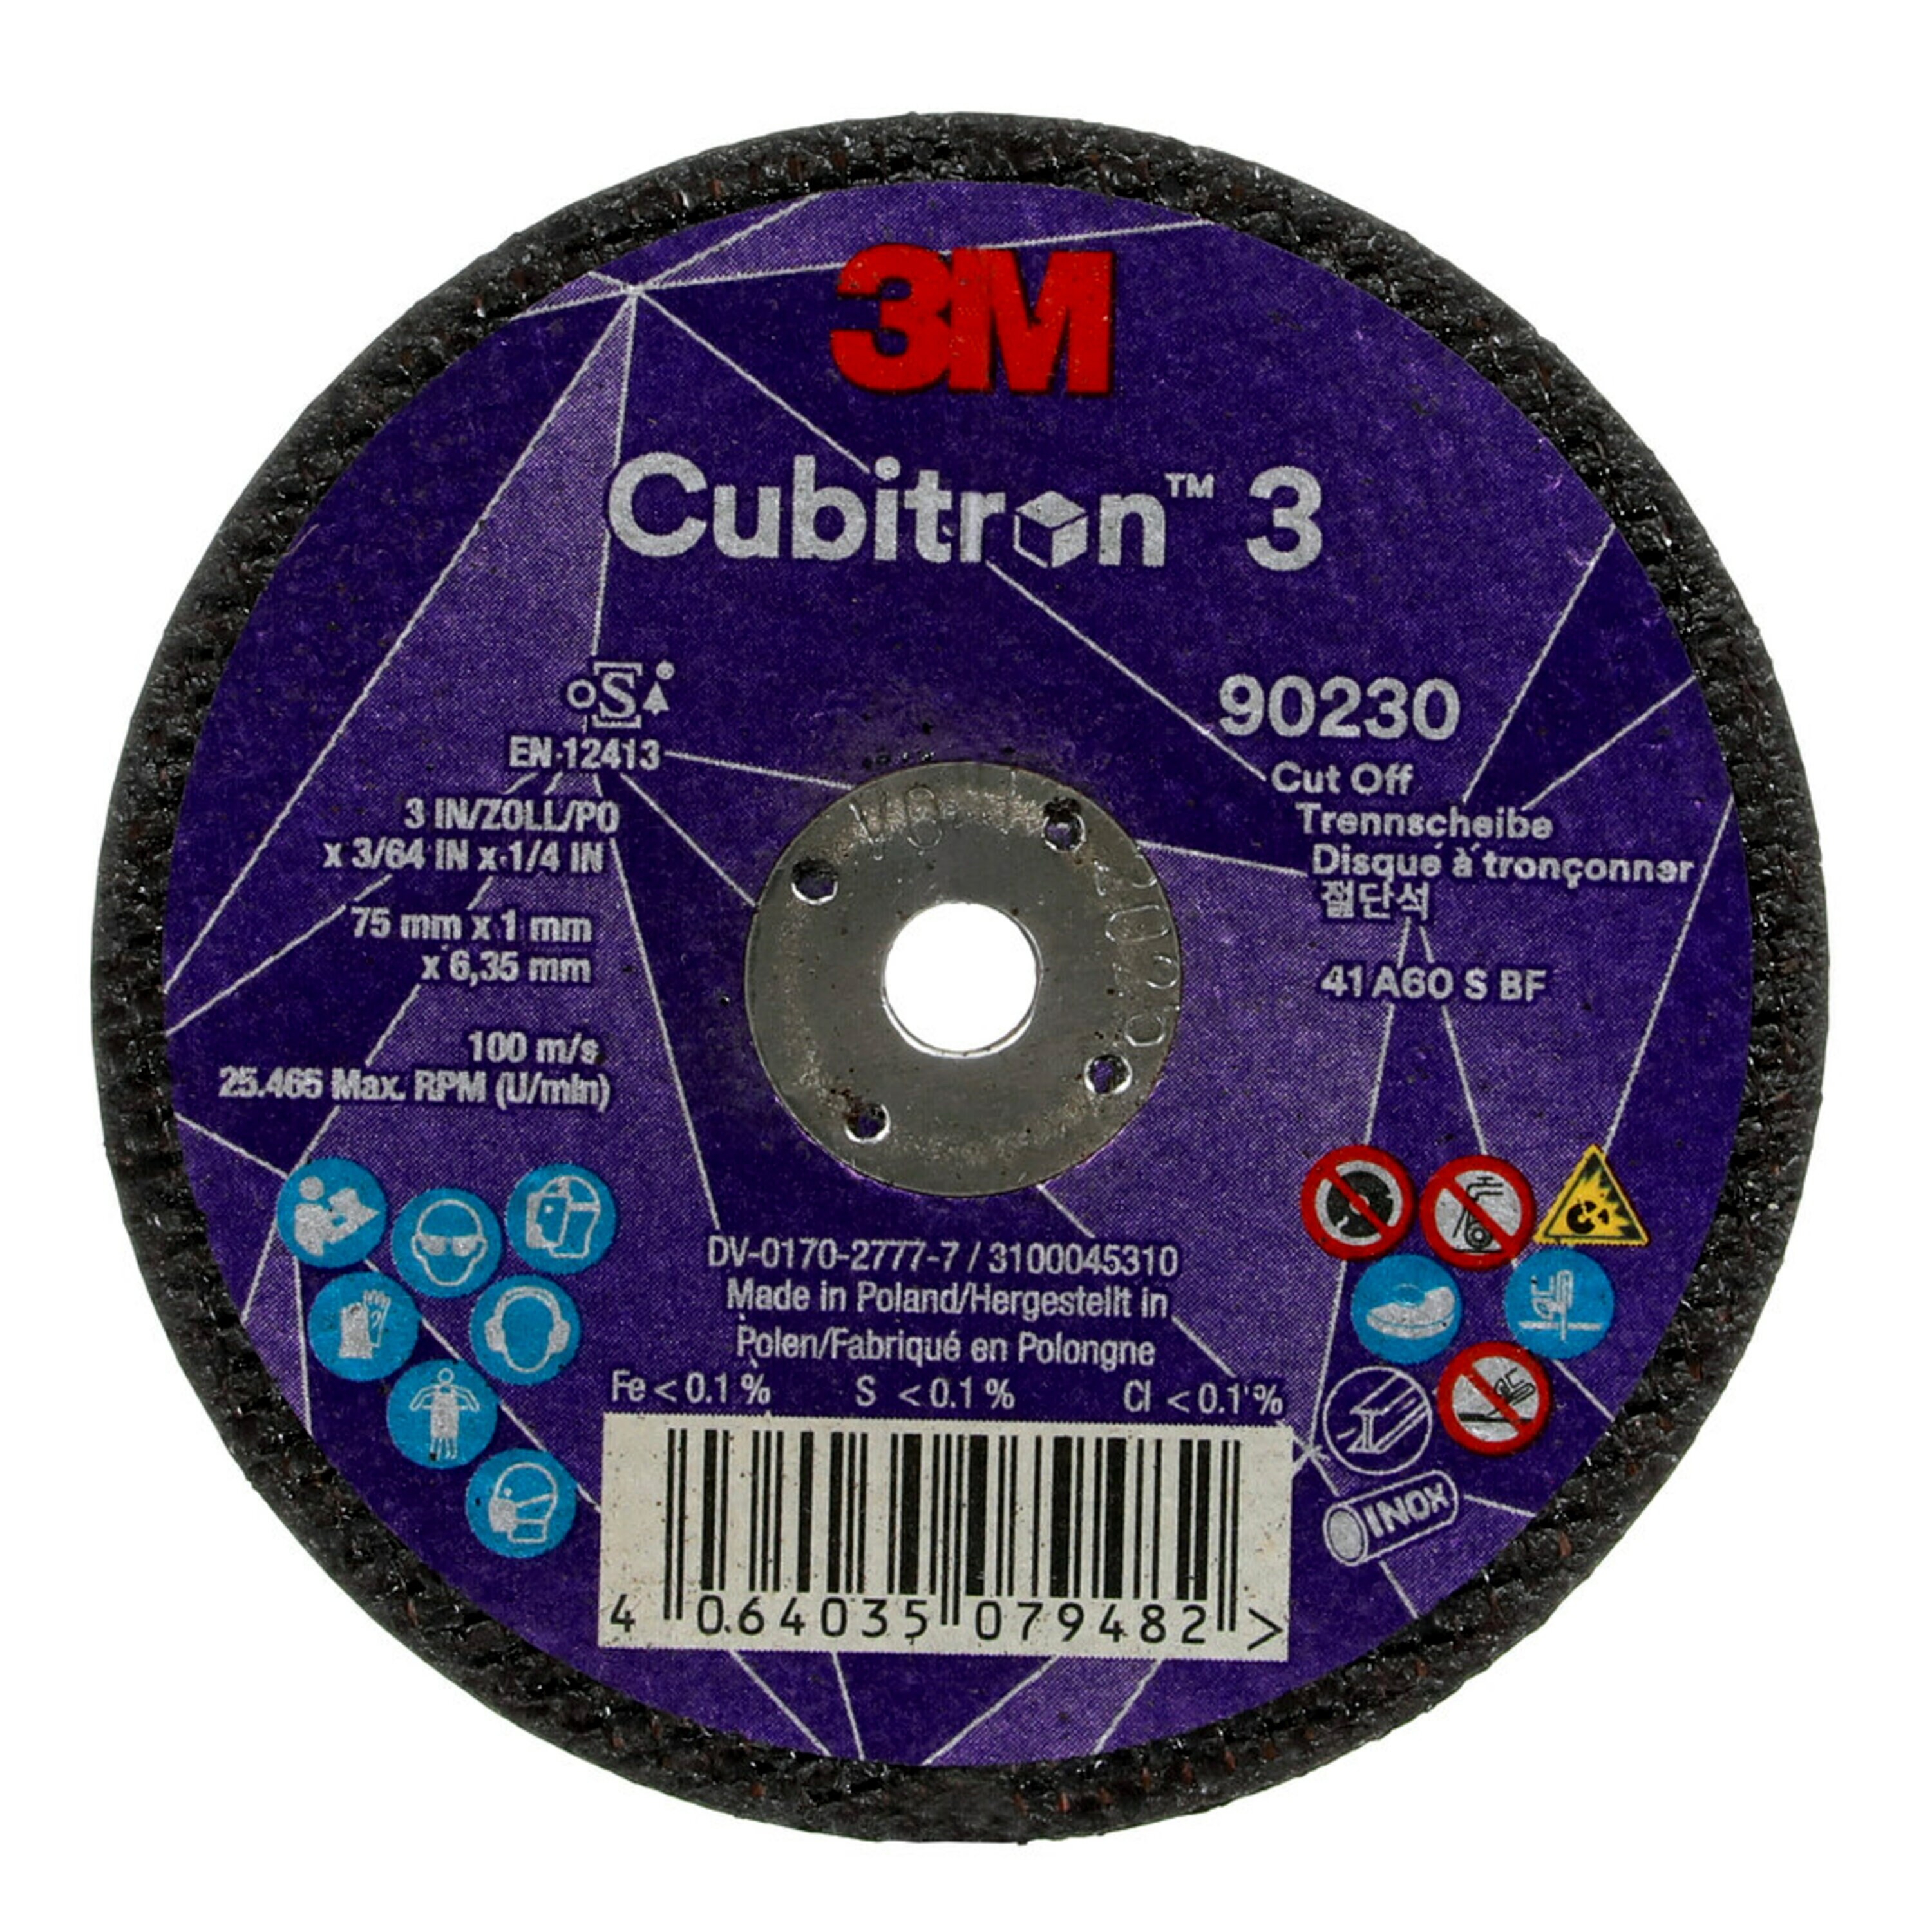 3M Cubitron 3 Trennscheibe, 75 mm, 1 mm, 6,35 mm, 60+, Typ 41 #90230